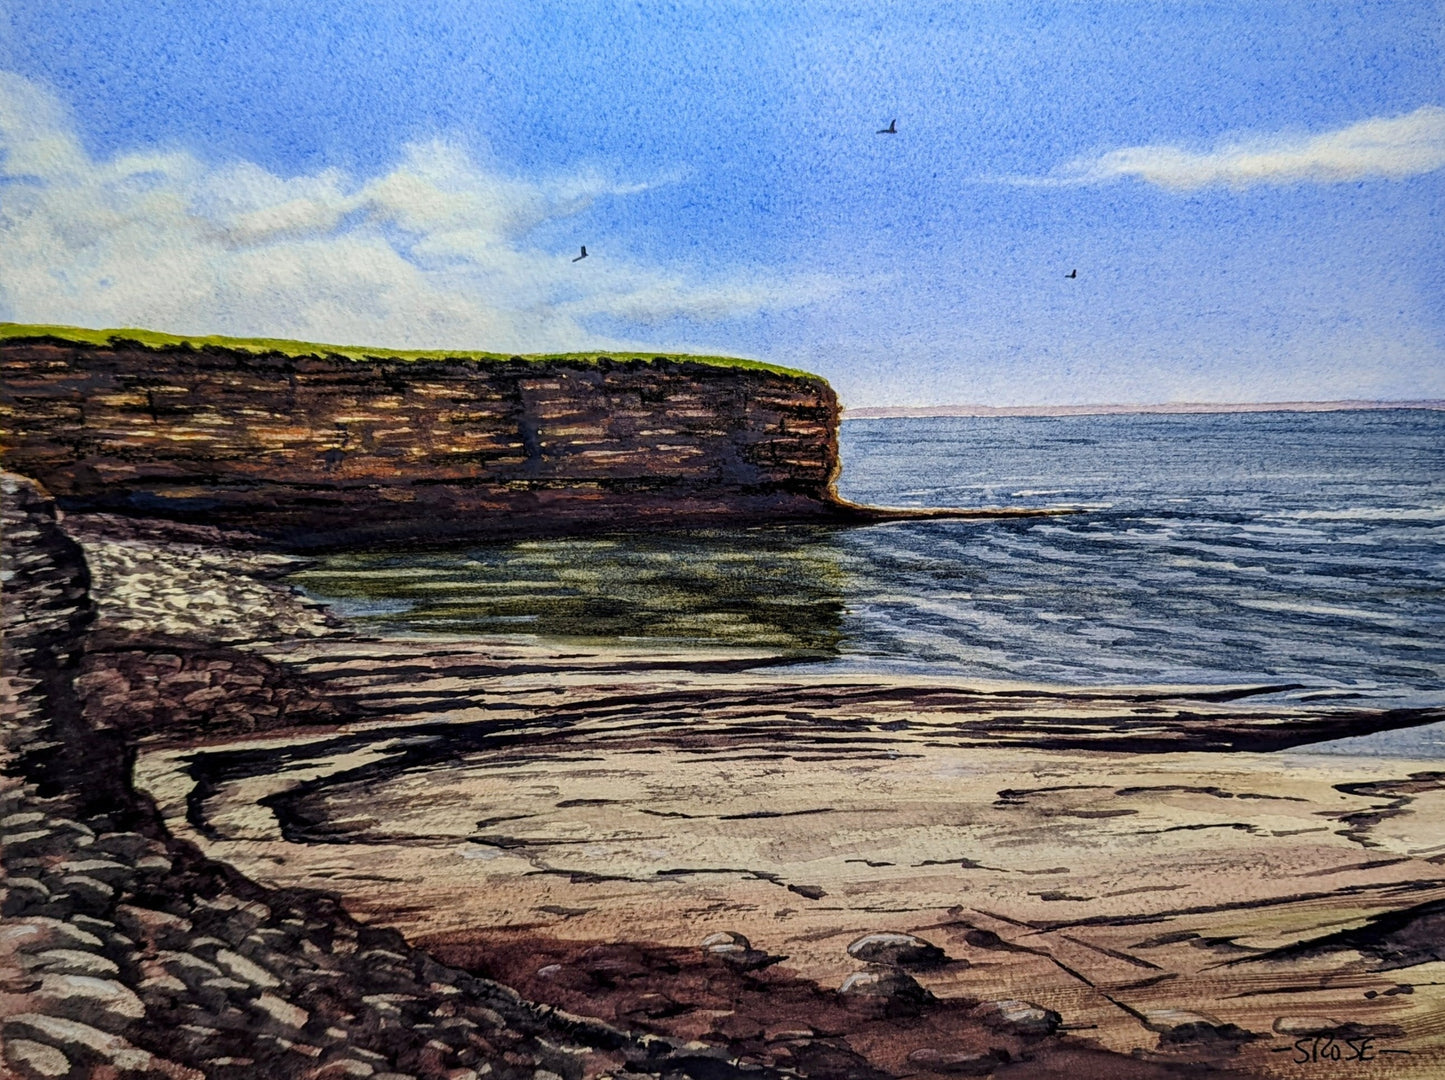 No. 2 Cove, Bell Island, Newfoundland (original watercolor painting)